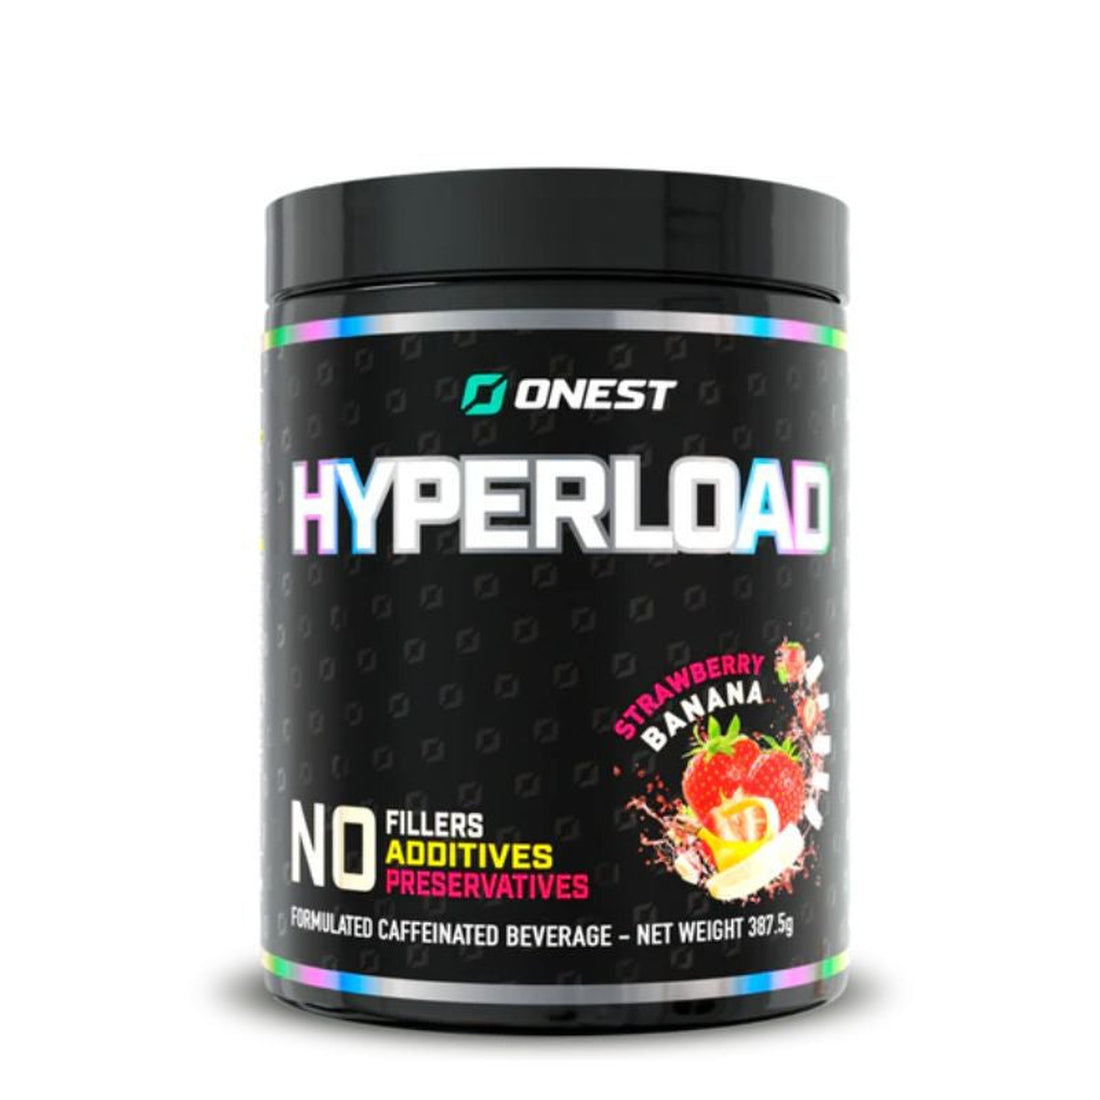 ONEST Hyperload Pre Workout